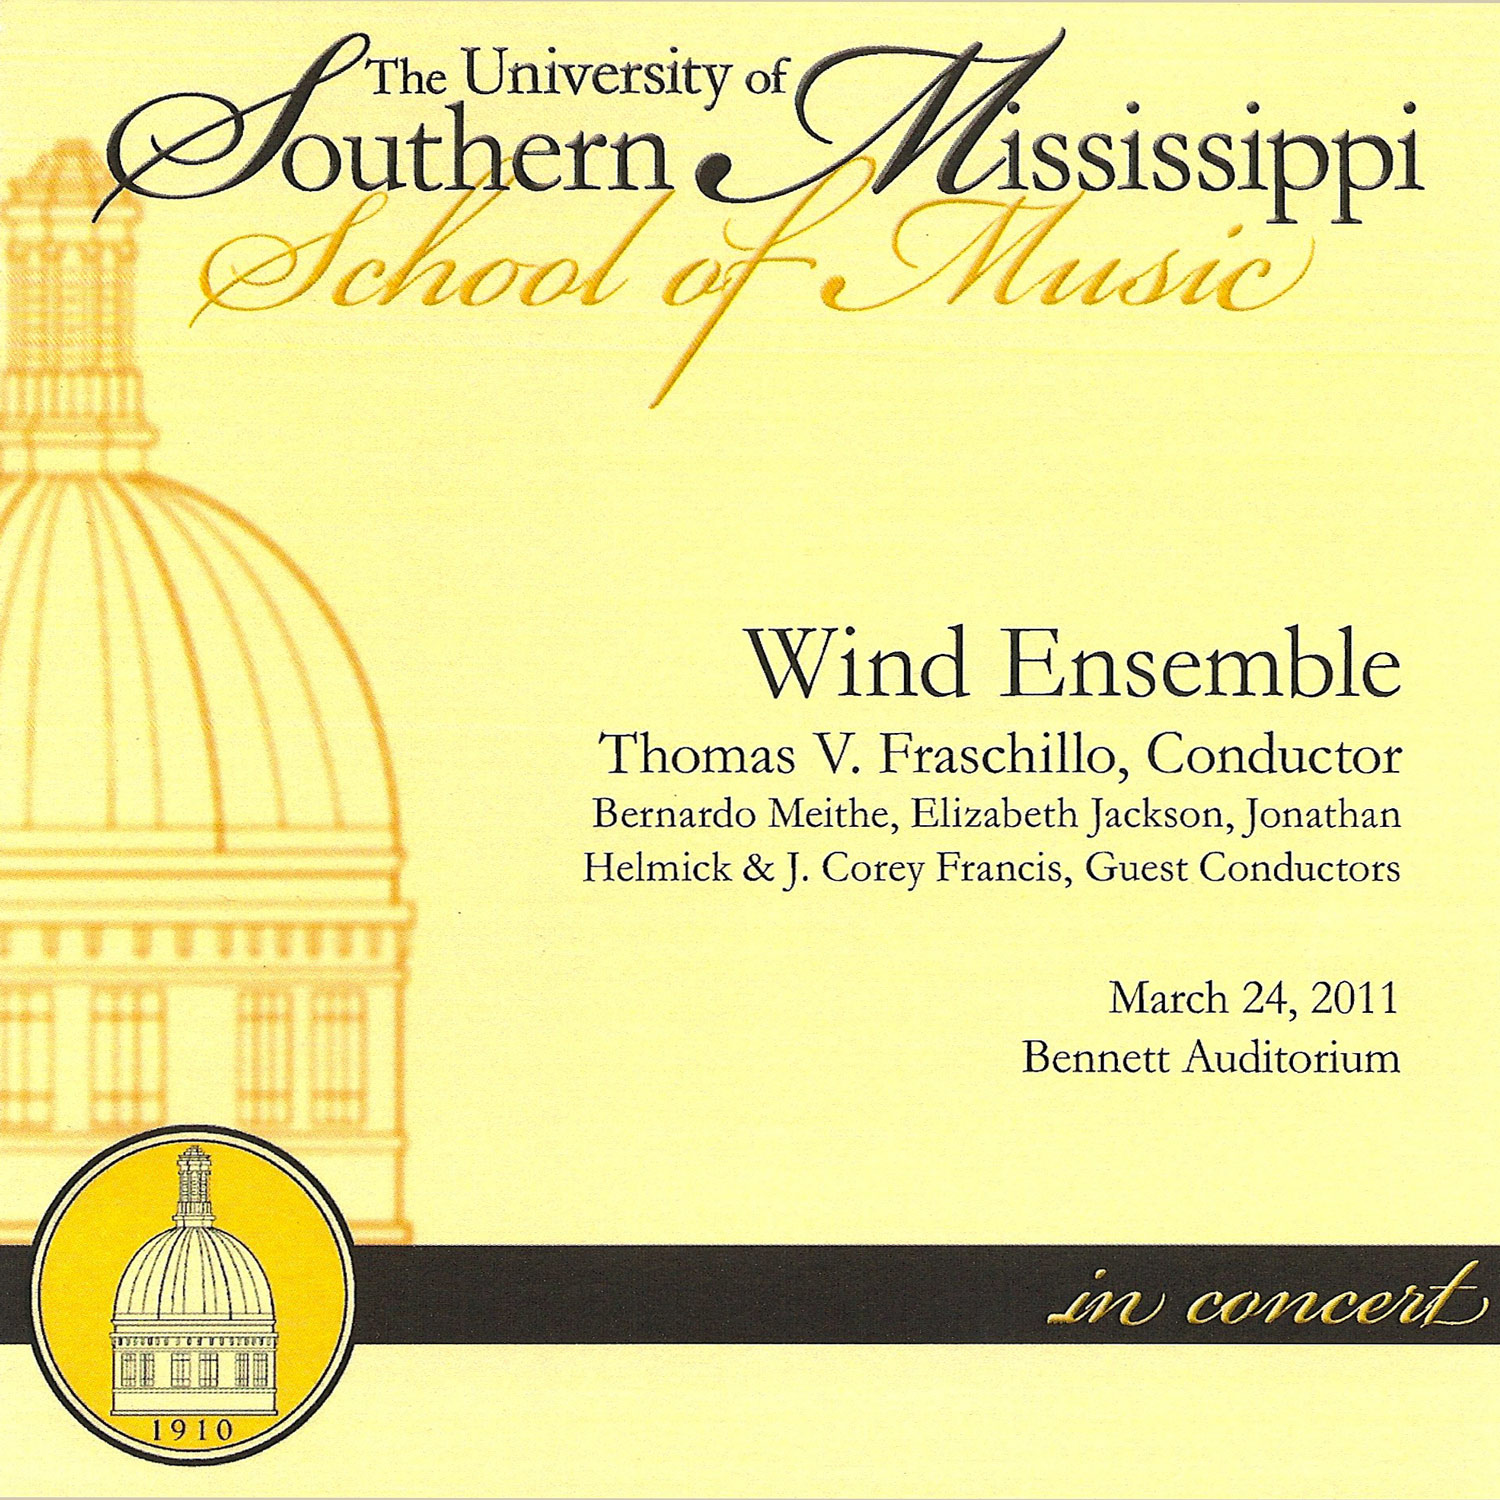 University of Southern Mississippi Wind Ensemble 3/24/2011